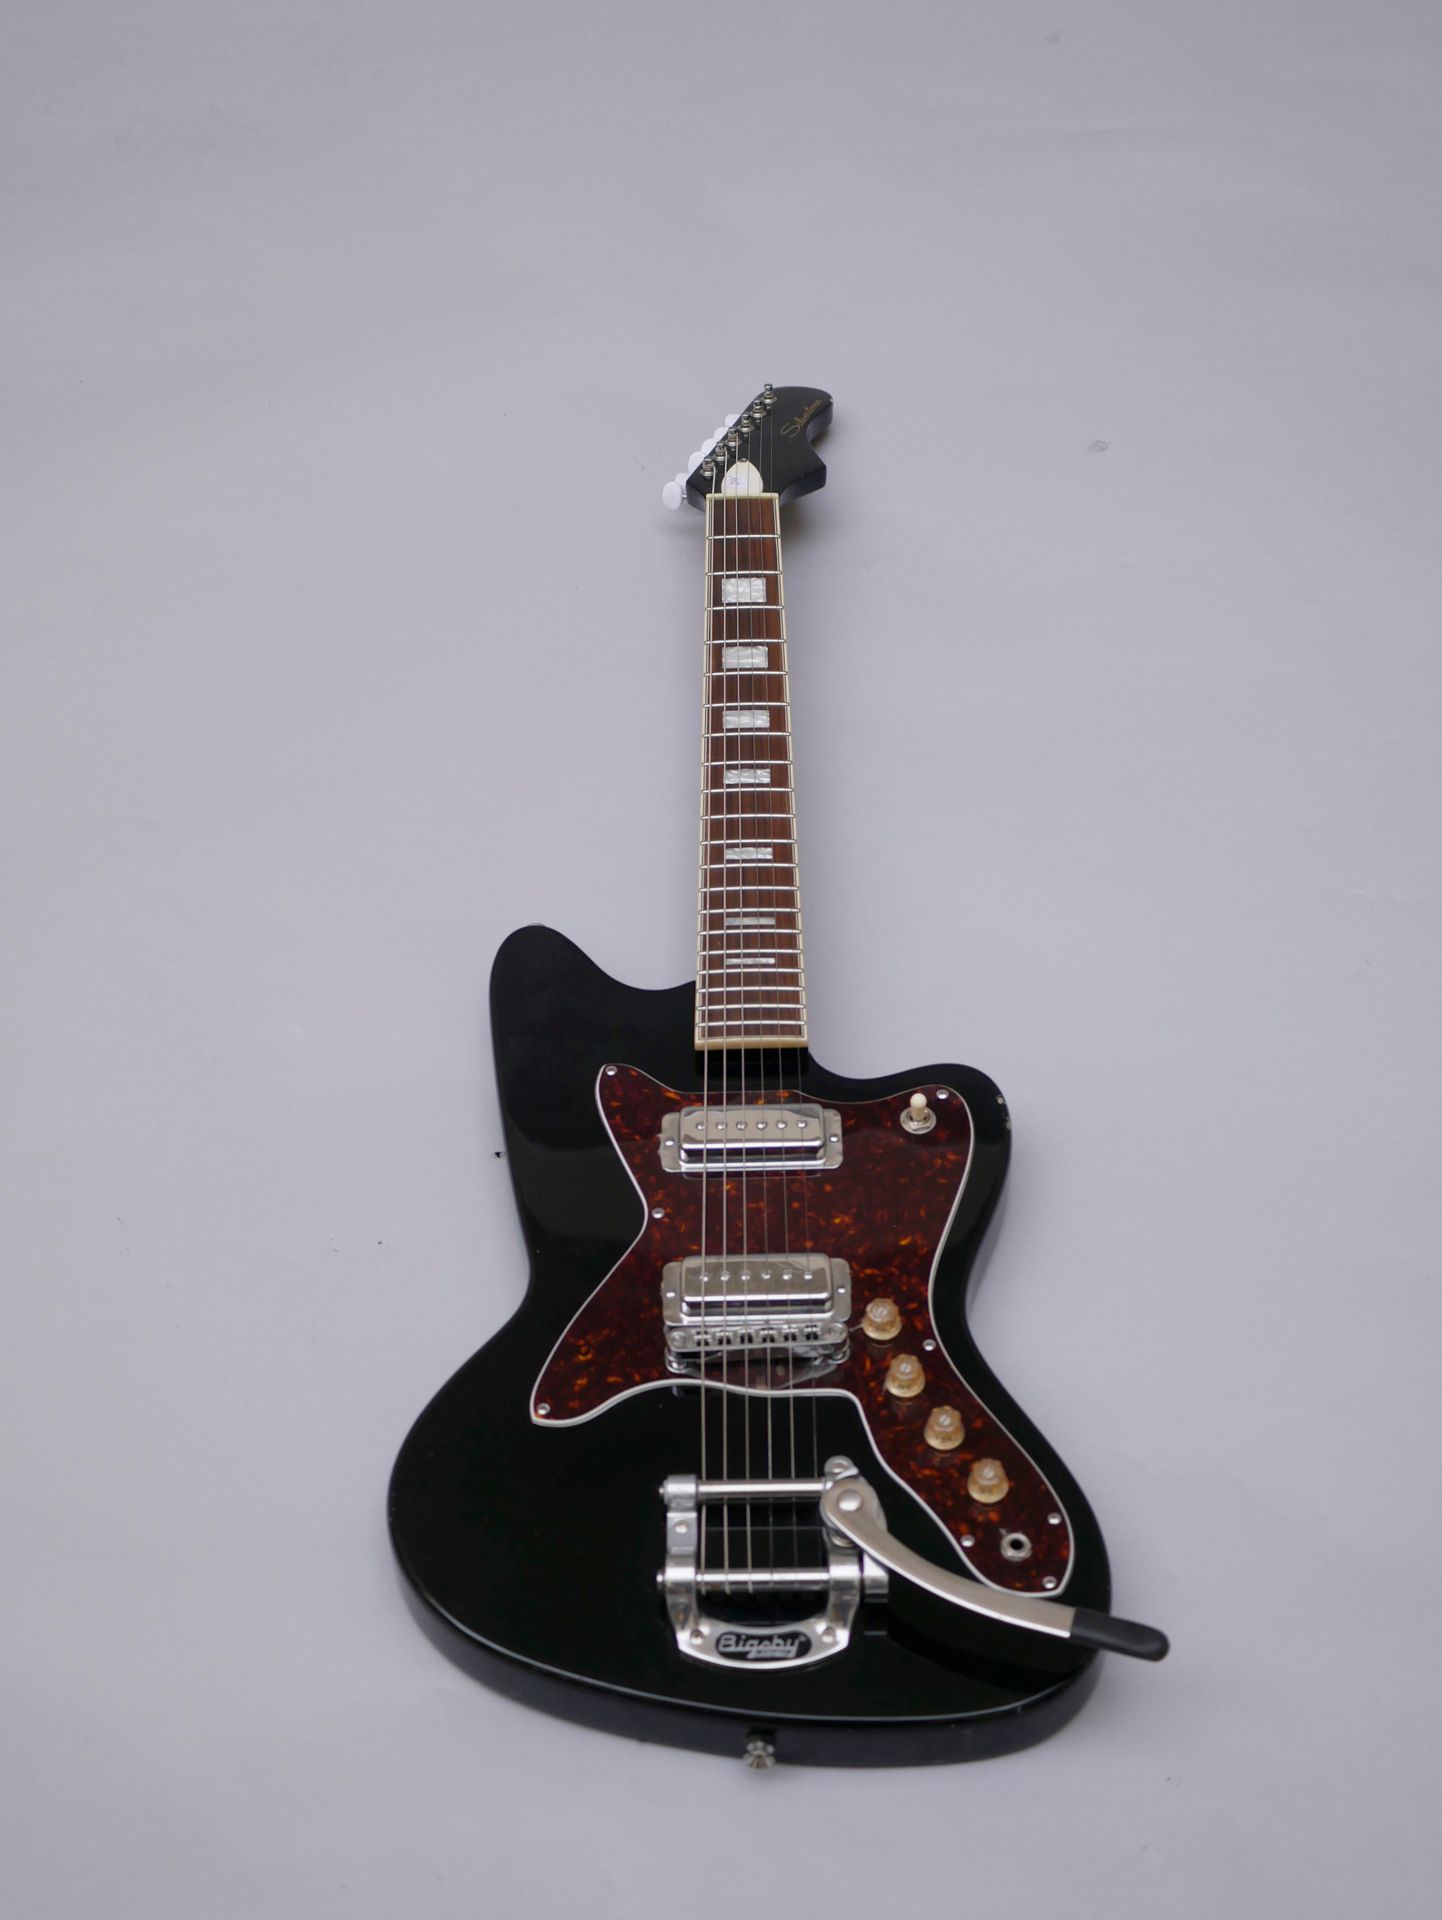 Null Solidbody-E-Gitarre der Marke Silvertone, Modell 1478, made in Indonesia. 
&hellip;